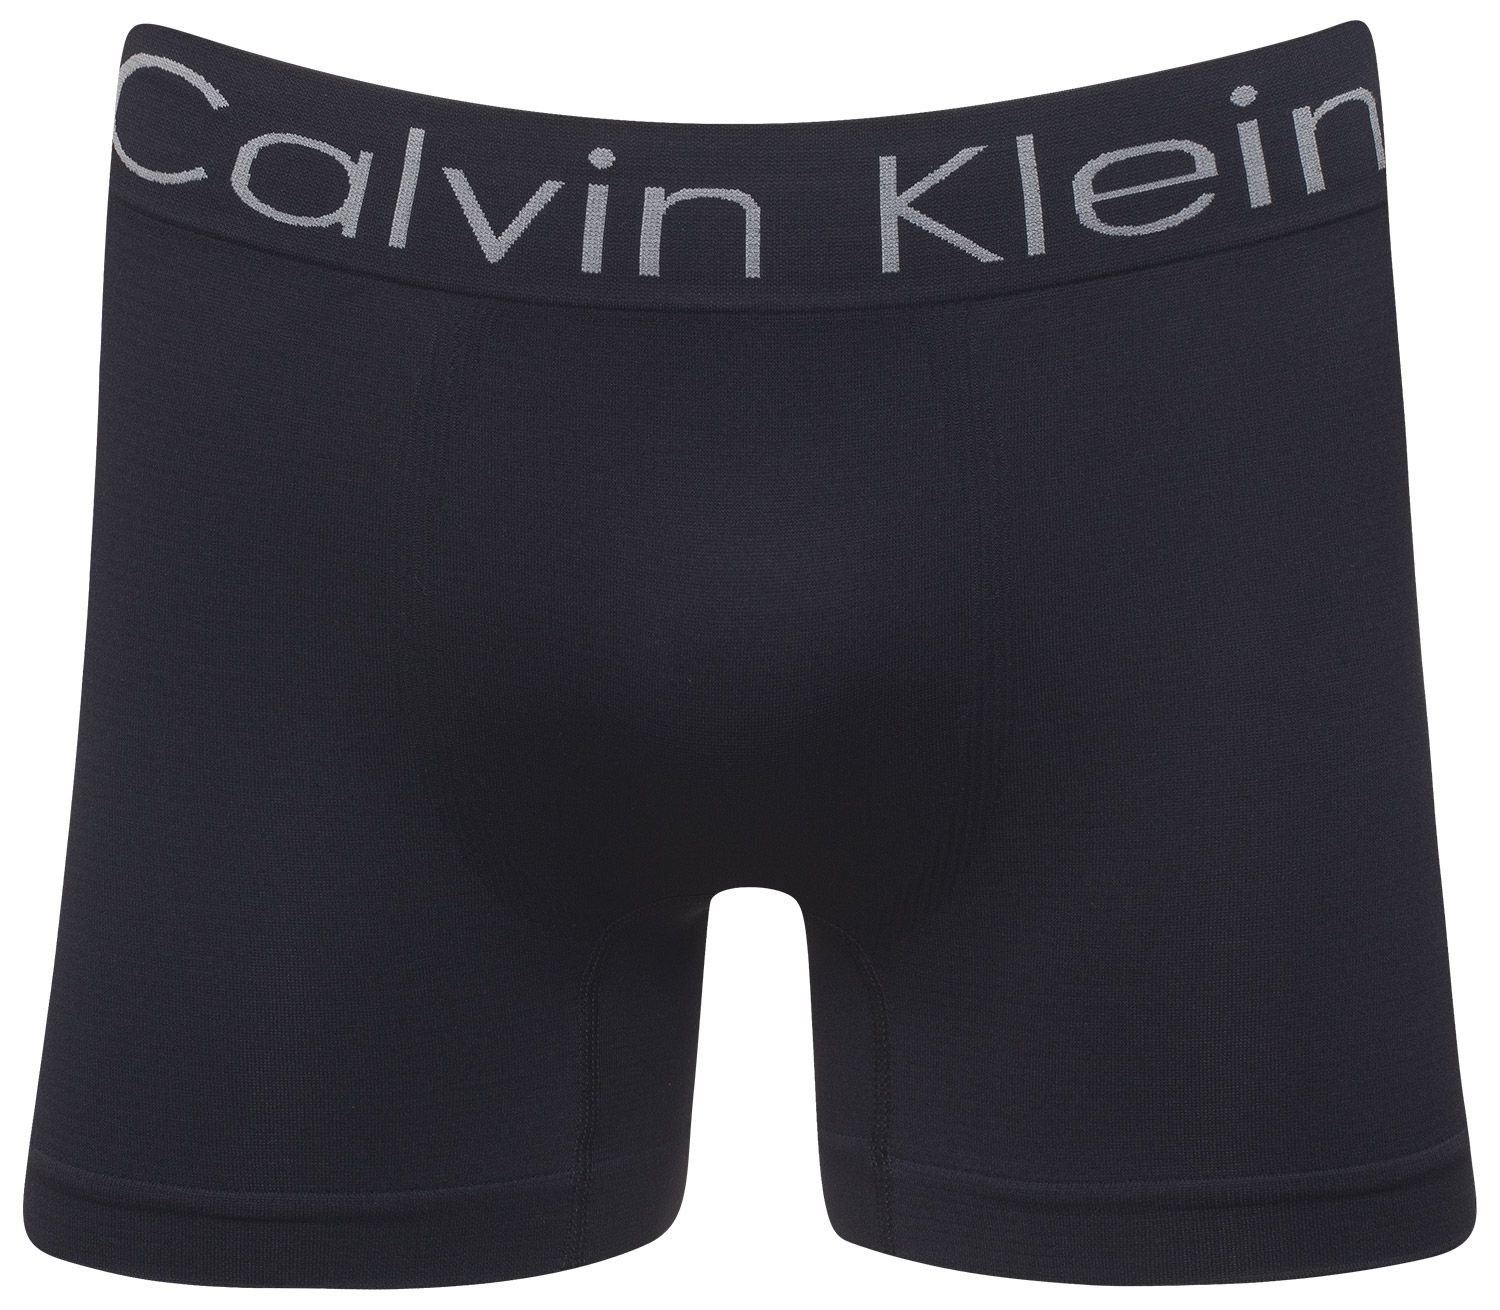 Cueca Calvin Klein Jockstrap Cotton Monolith Masculina